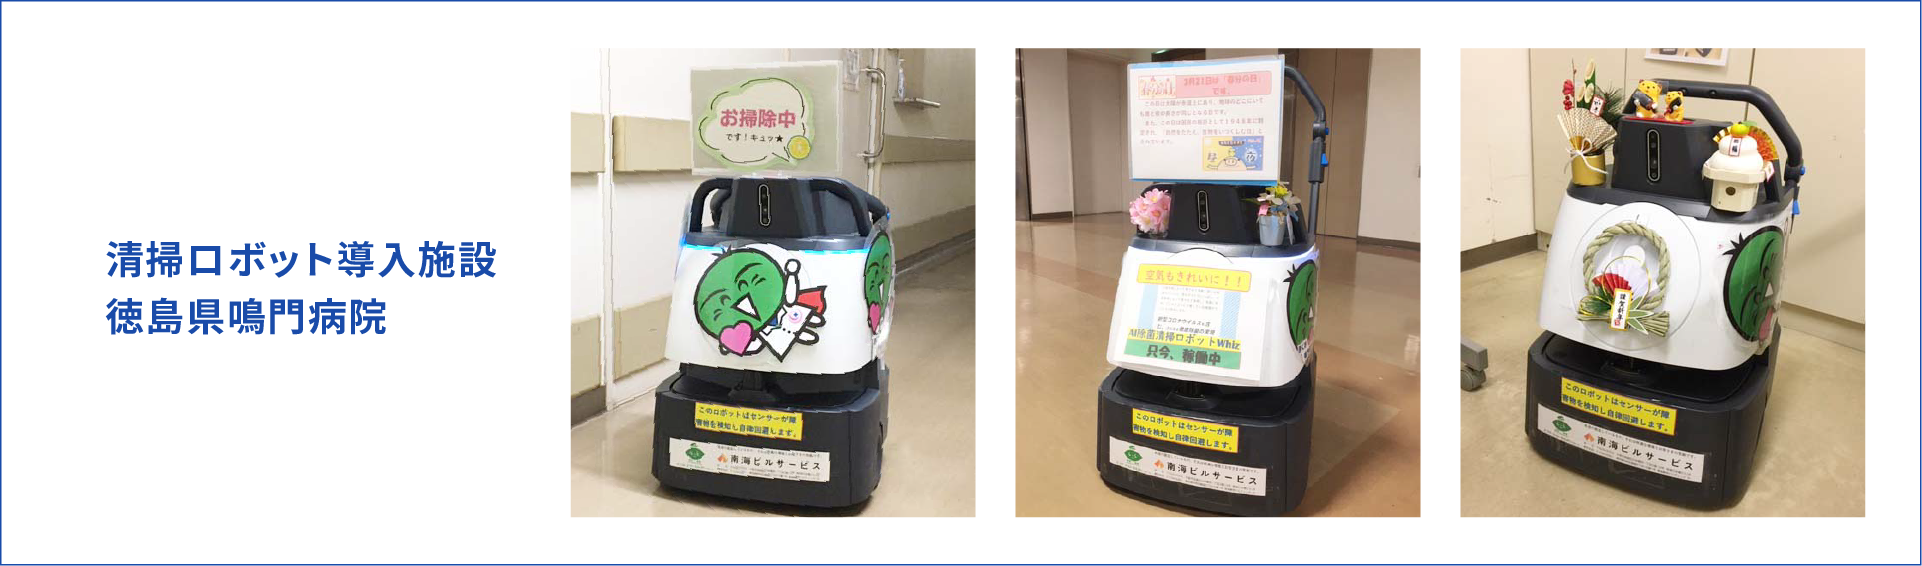 清掃ロボット導入施設徳島県鳴門病院